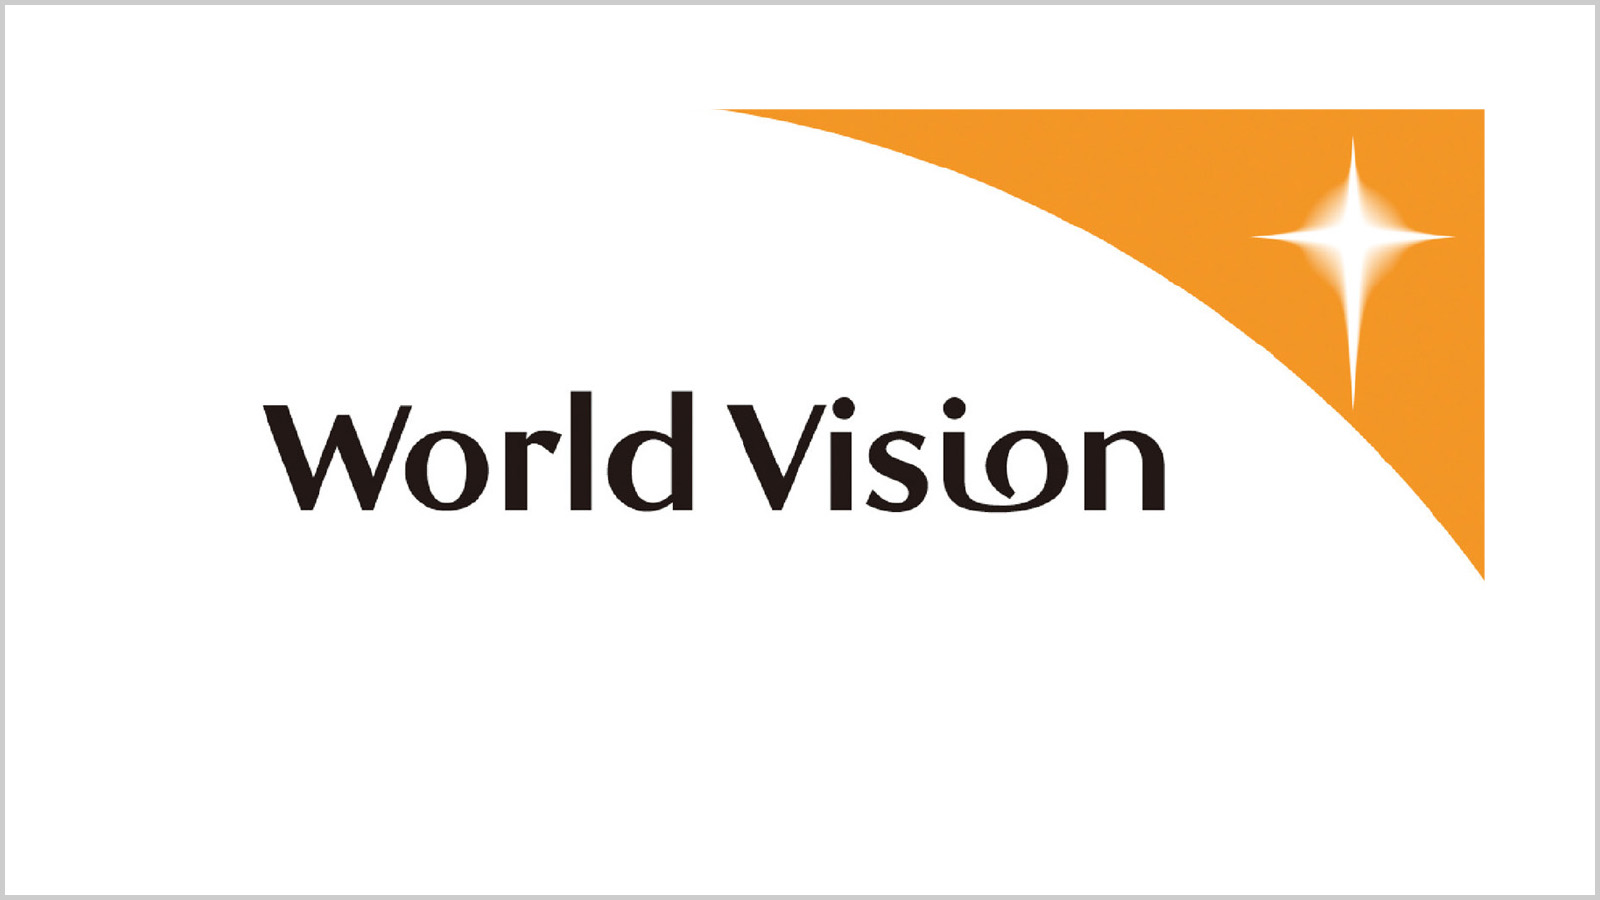 world_vision.jpg